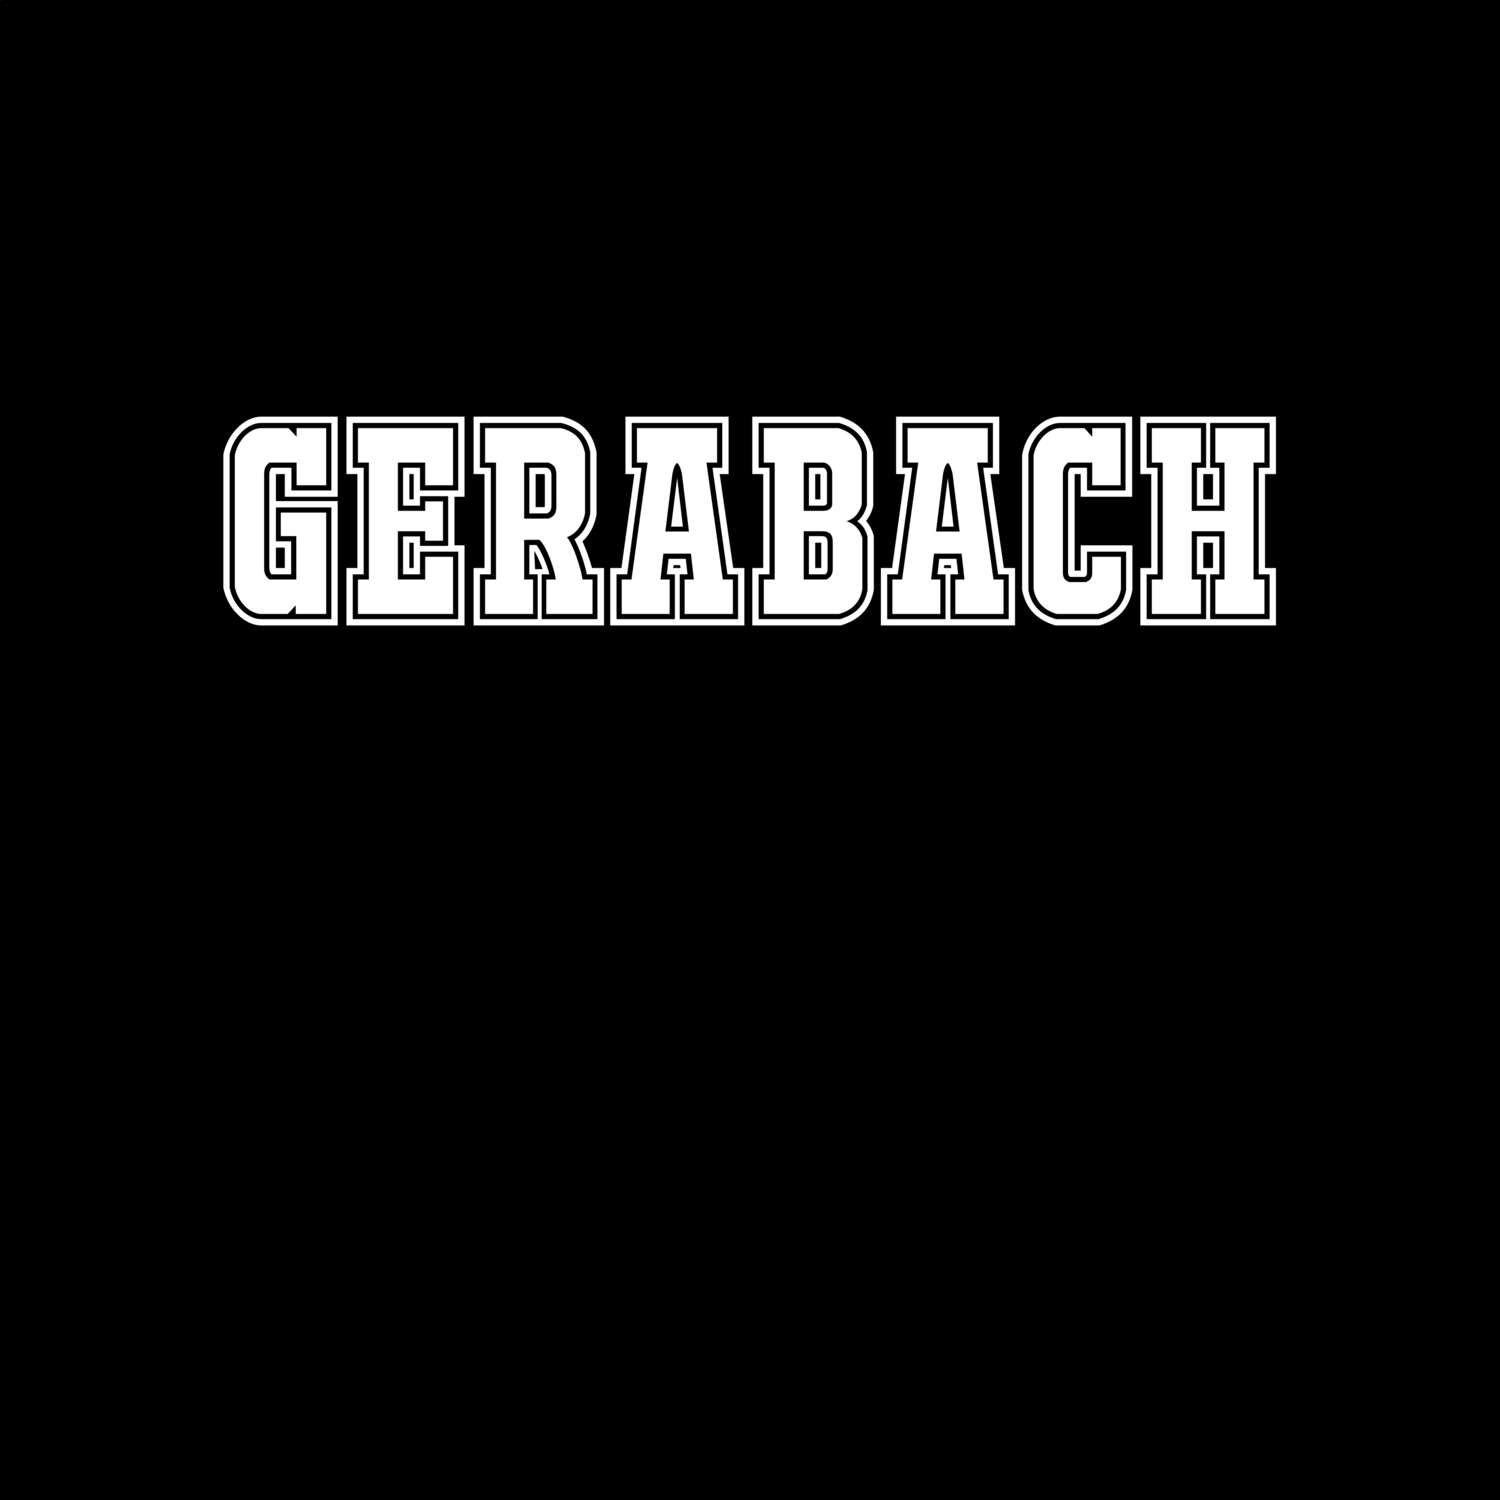 Gerabach T-Shirt »Classic«